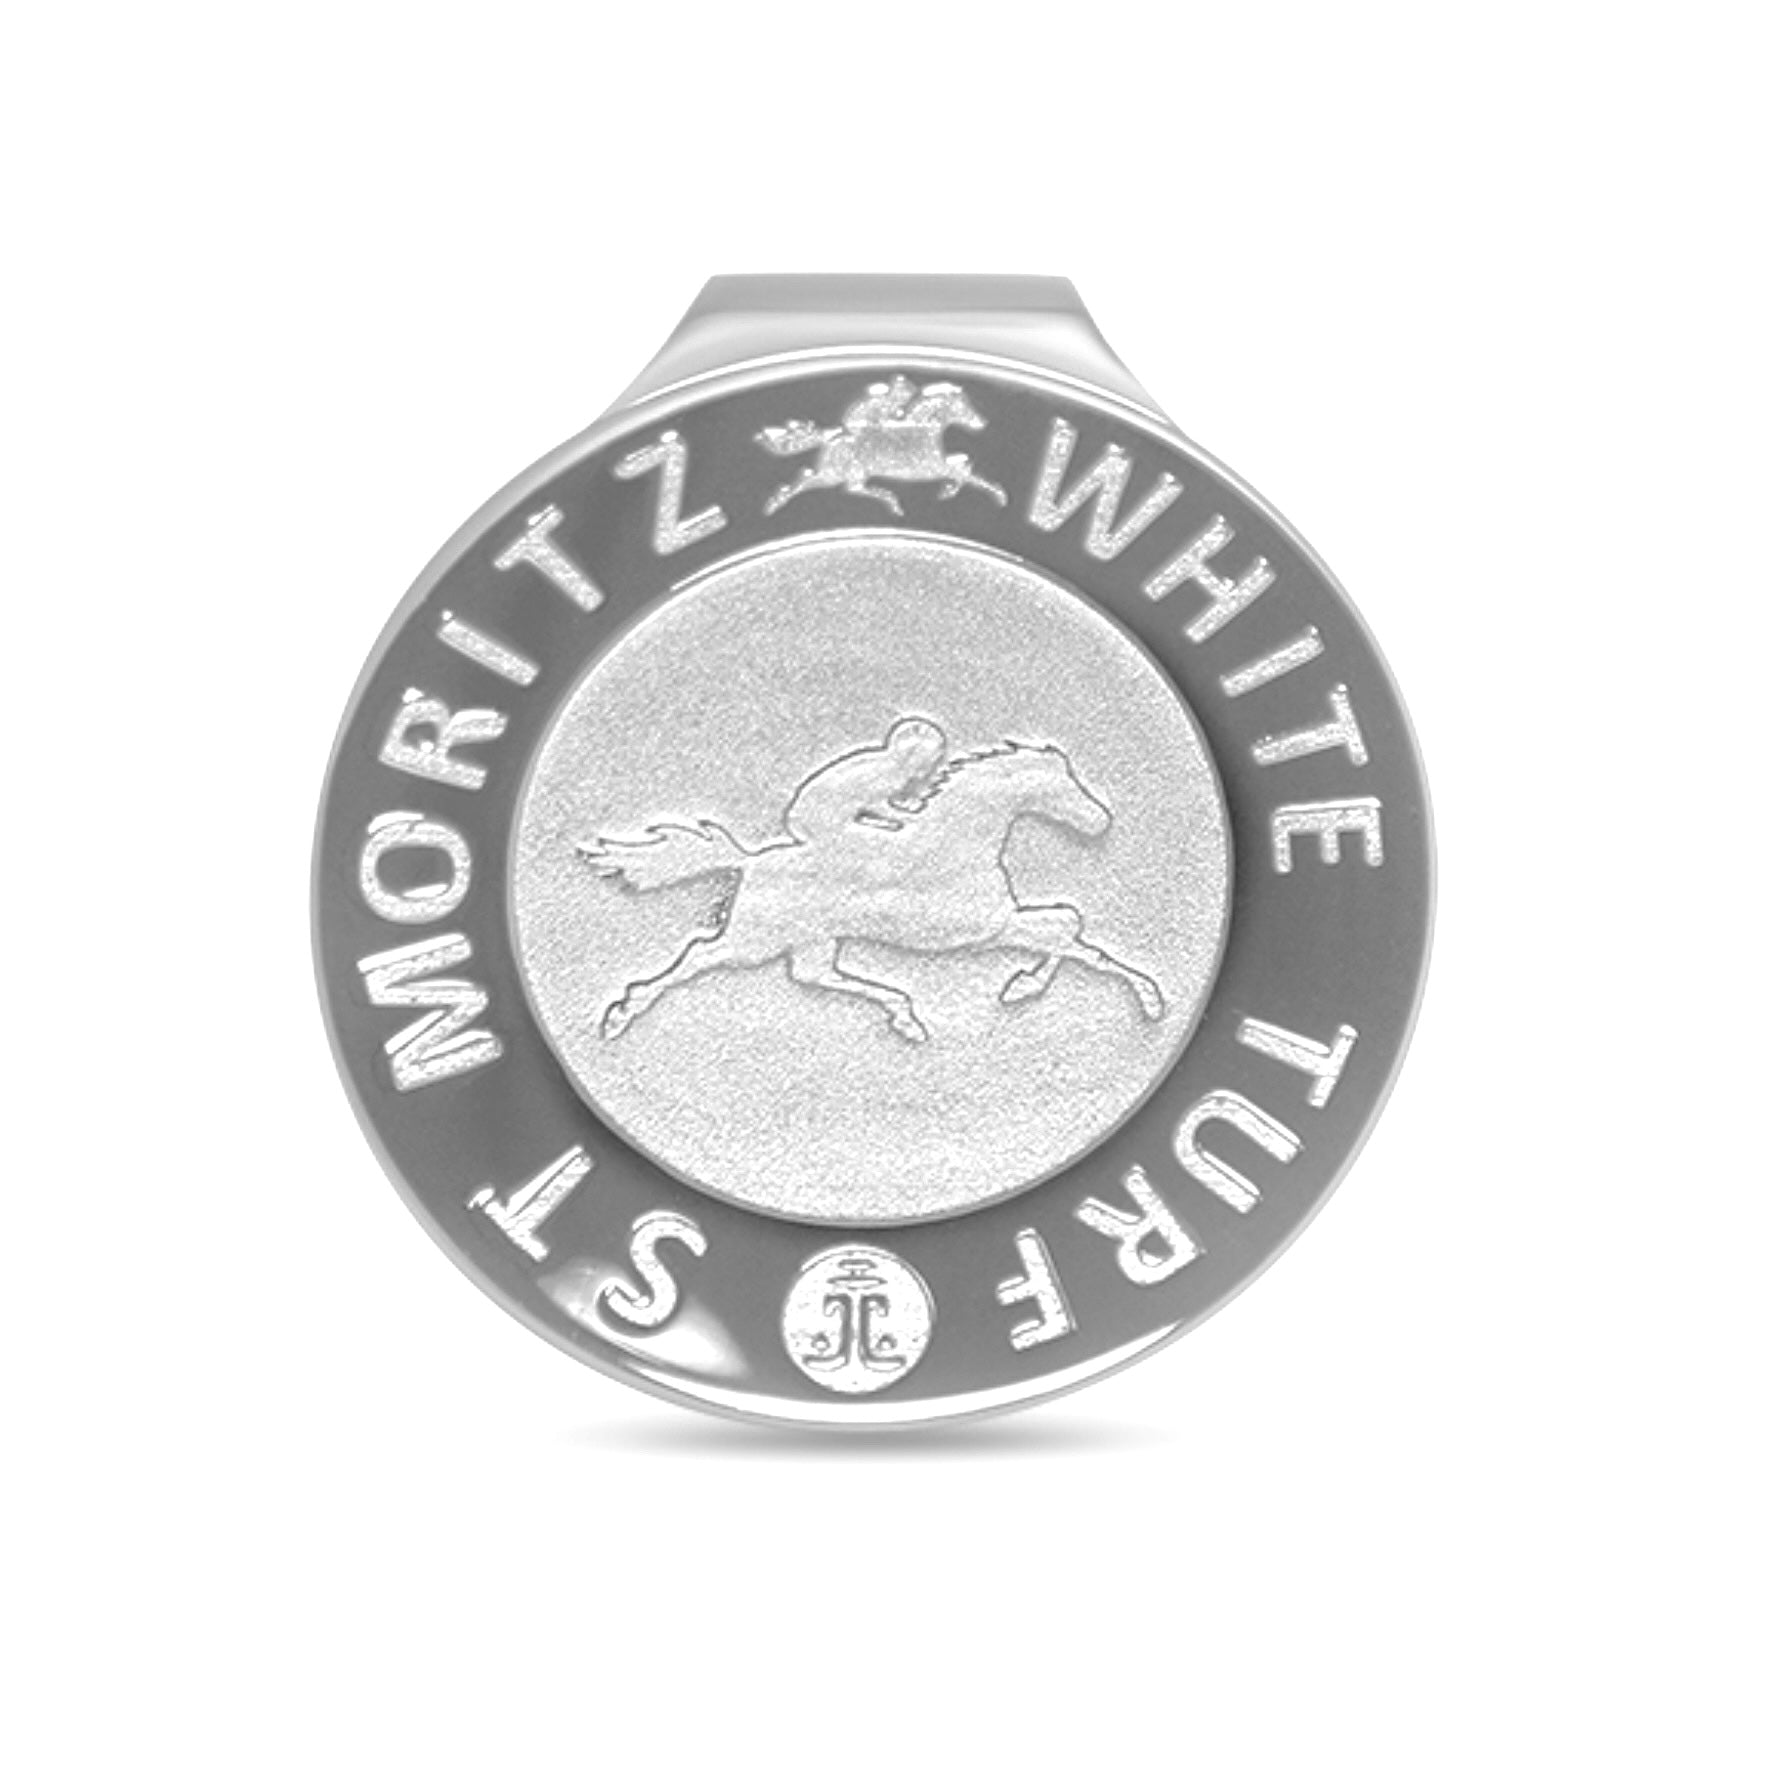 St. Moritz White Truf Silve